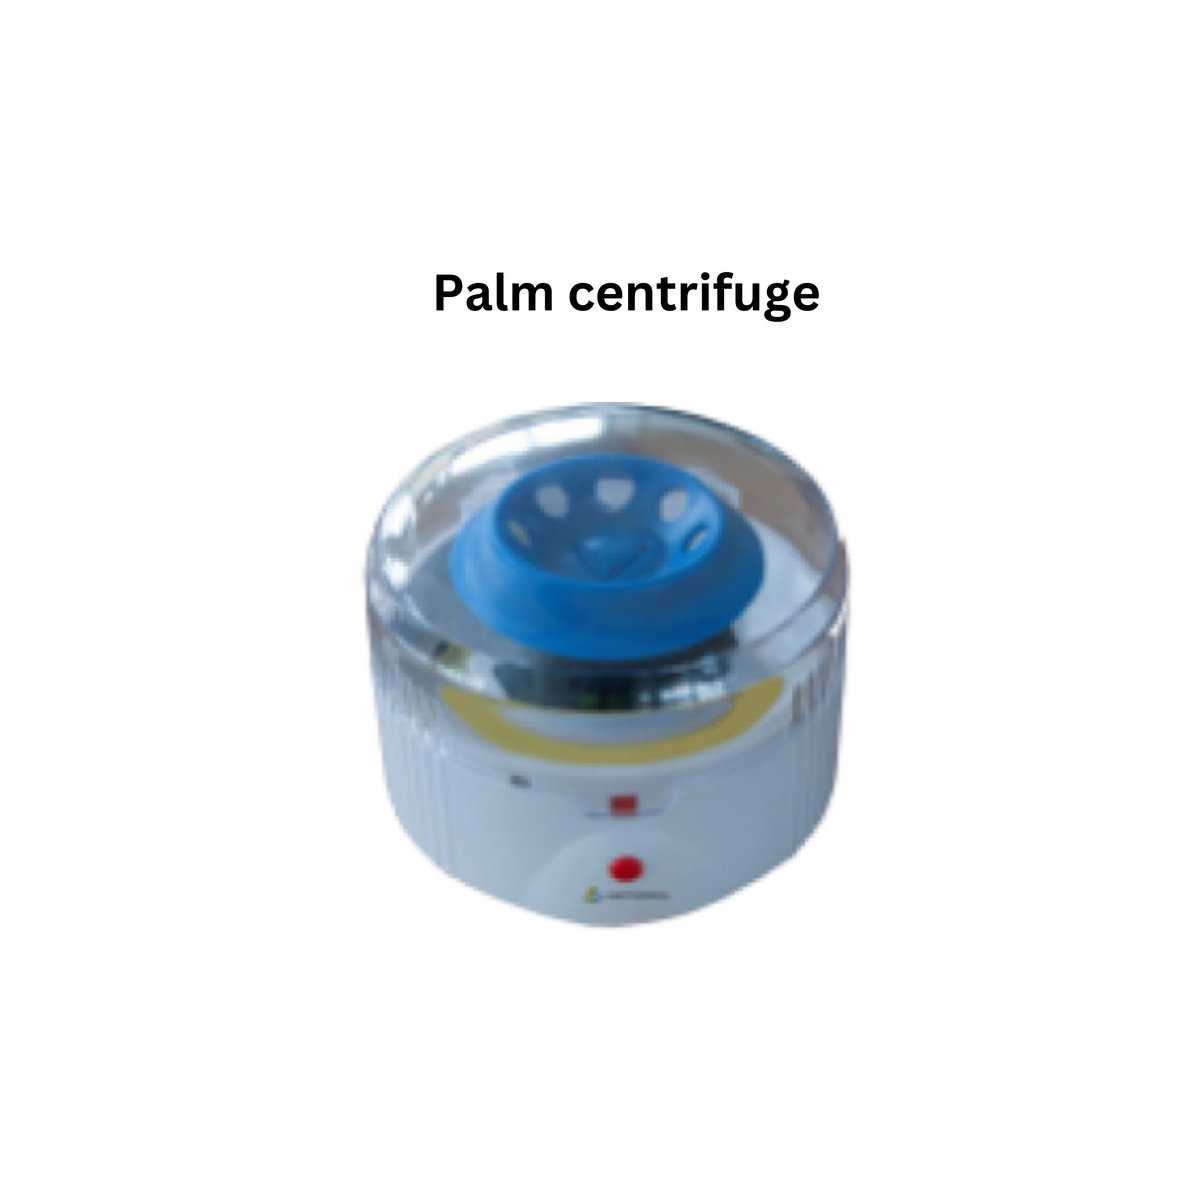 Palm centrifuge.jpg